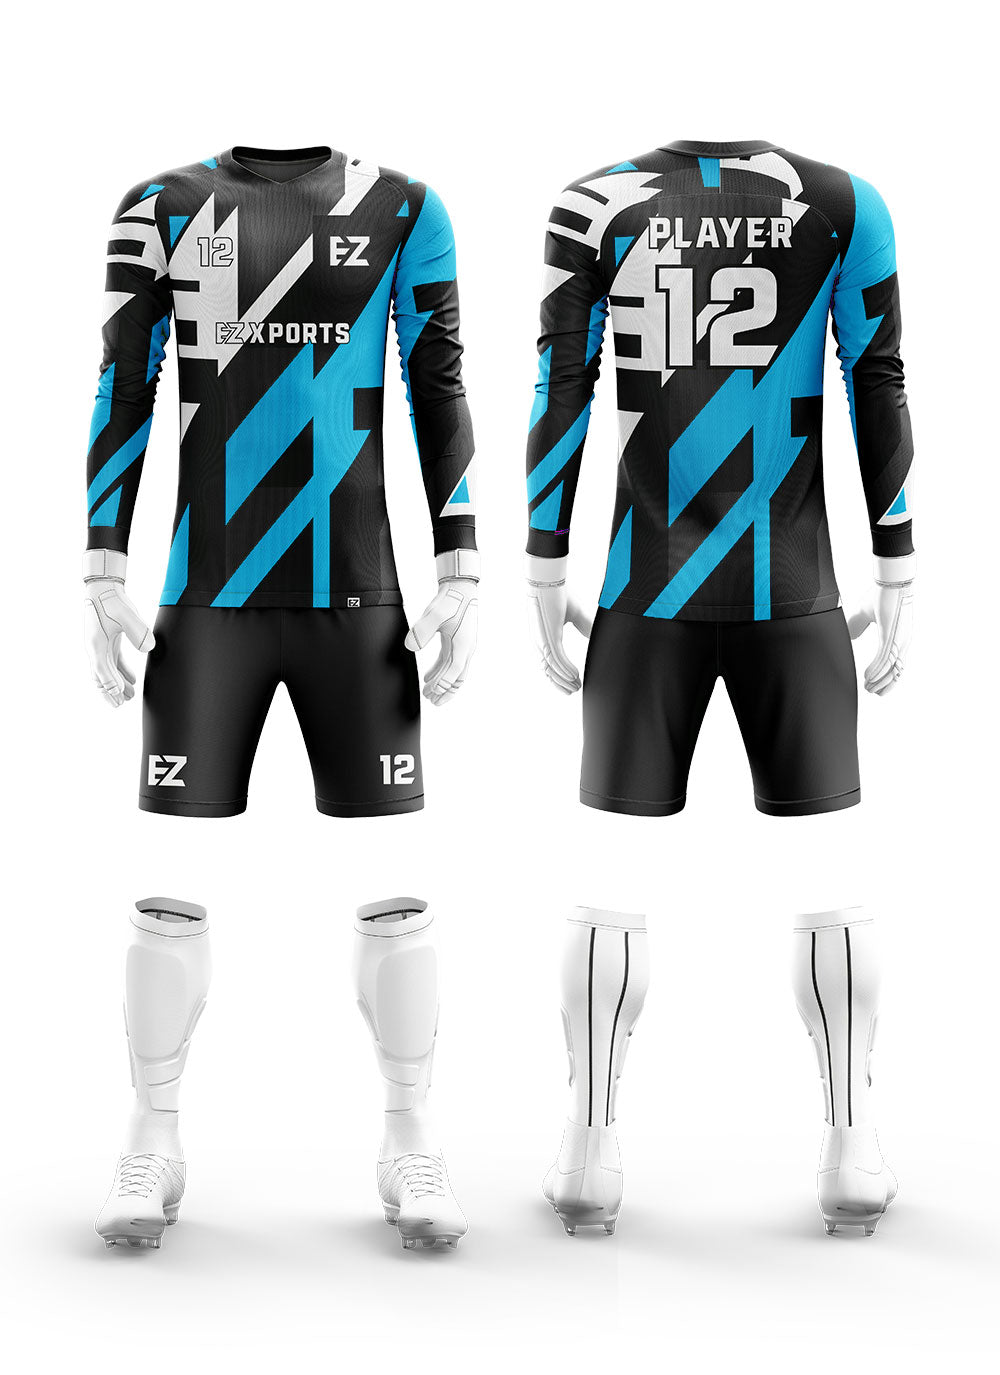 Custom white/black soccer team Goalkeeper uniforms with your team